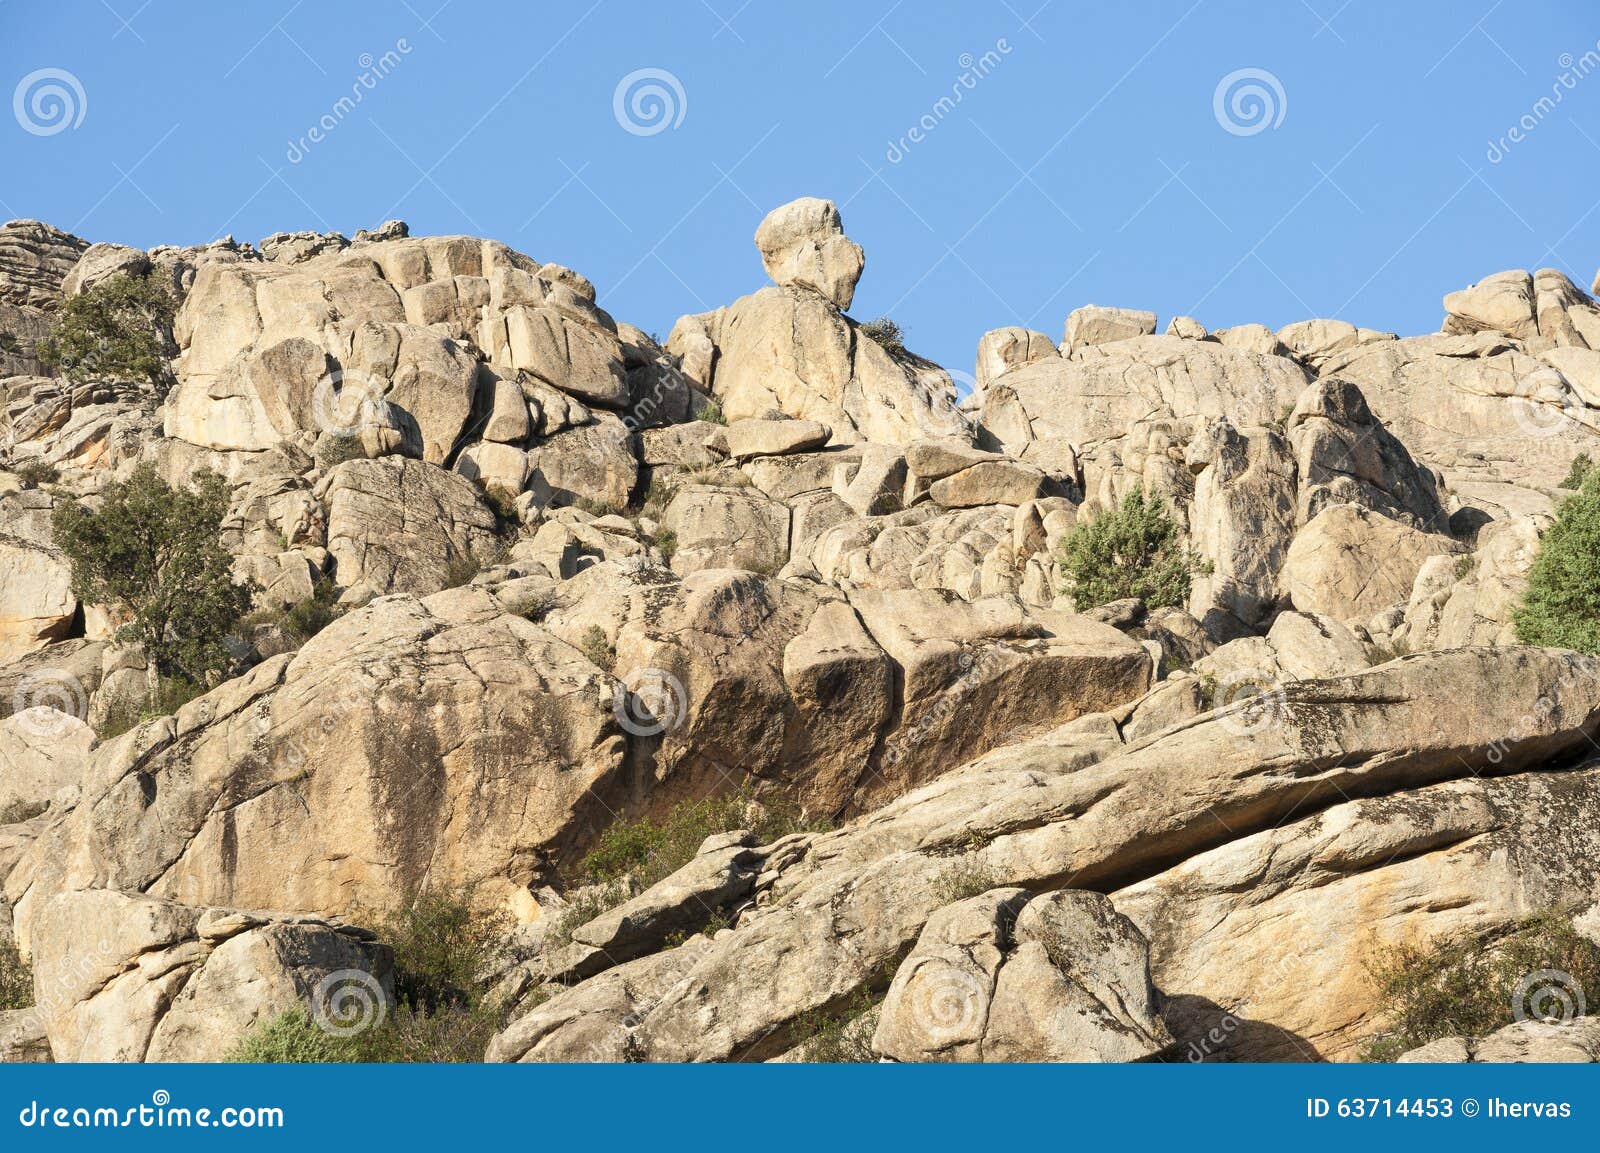 Granite outcrops stock image. Image of spain, vegetation - 63714453